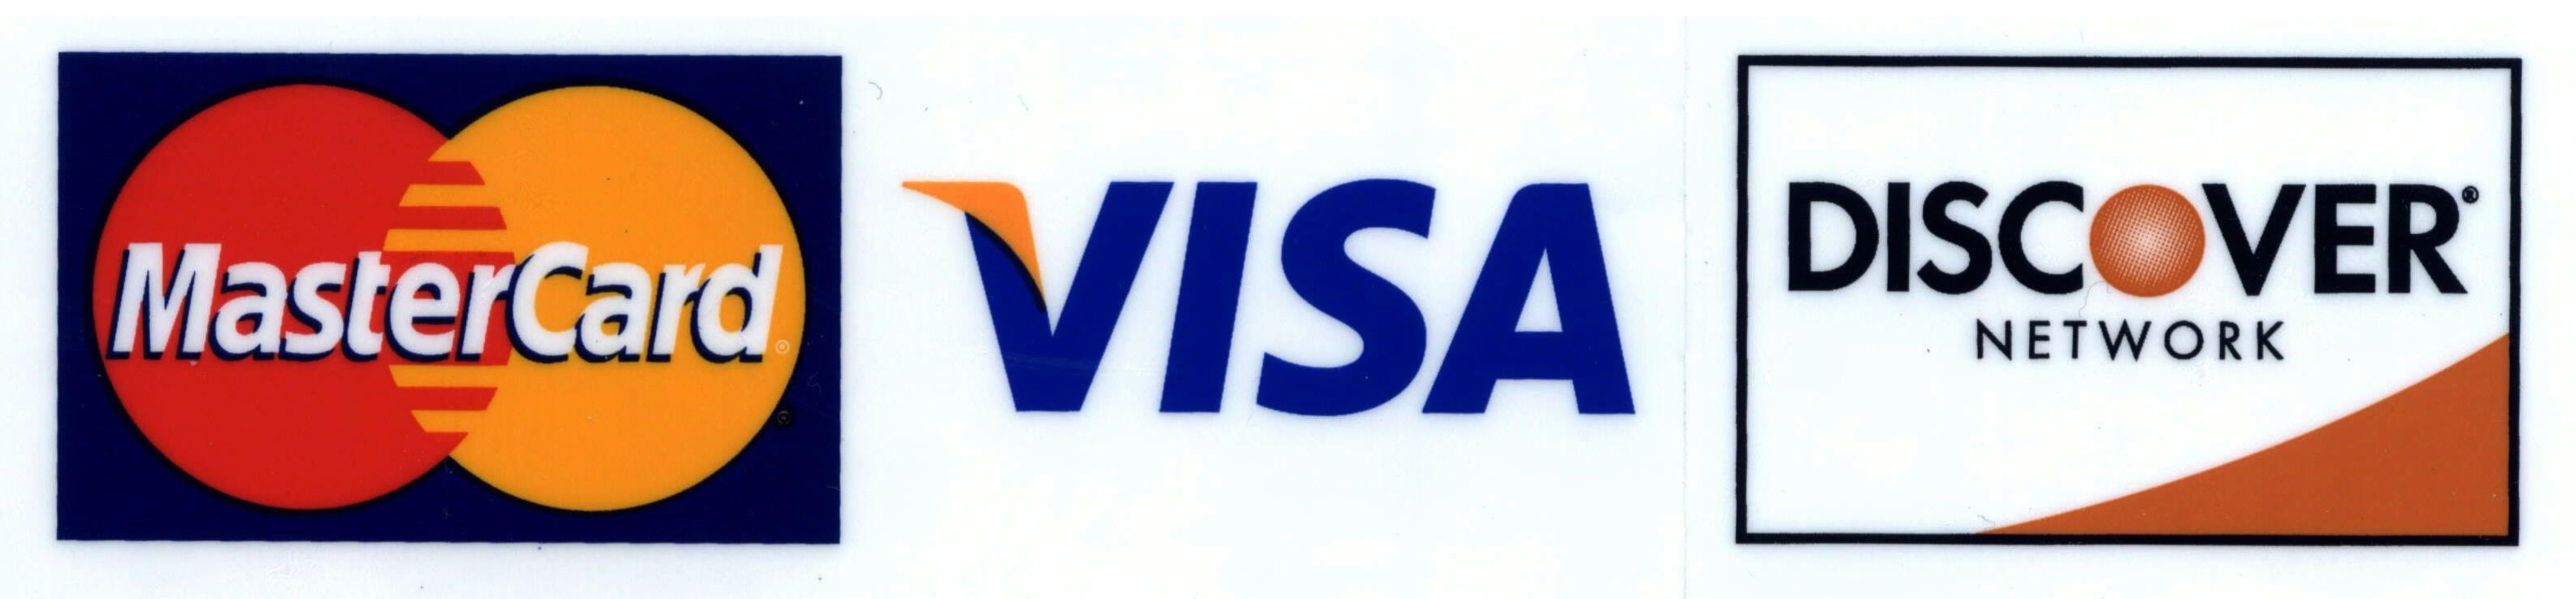 Printable Visa MasterCard Discover Logo - 9 Discover Credit Card Logo Vector Images - Credit Card Logos, Visa ...